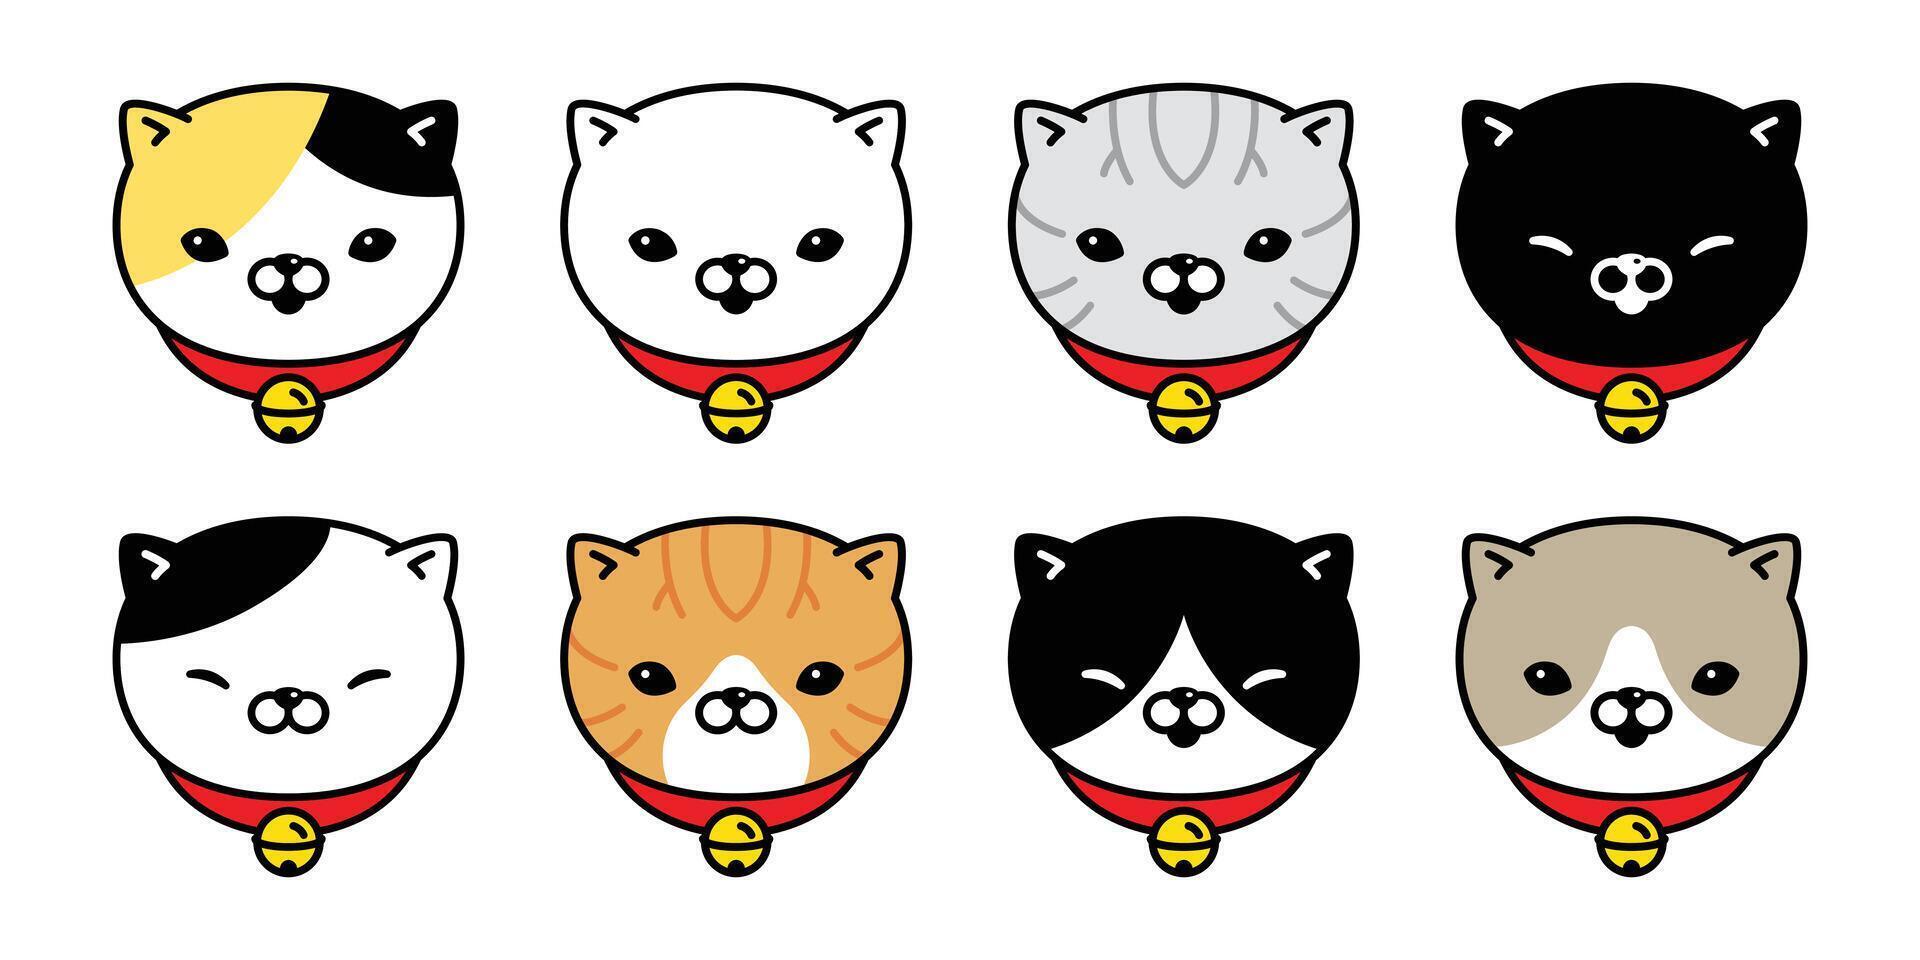 cat vector icon kitten breed calico logo symbol face head collar bell character cartoon doodle illustration design